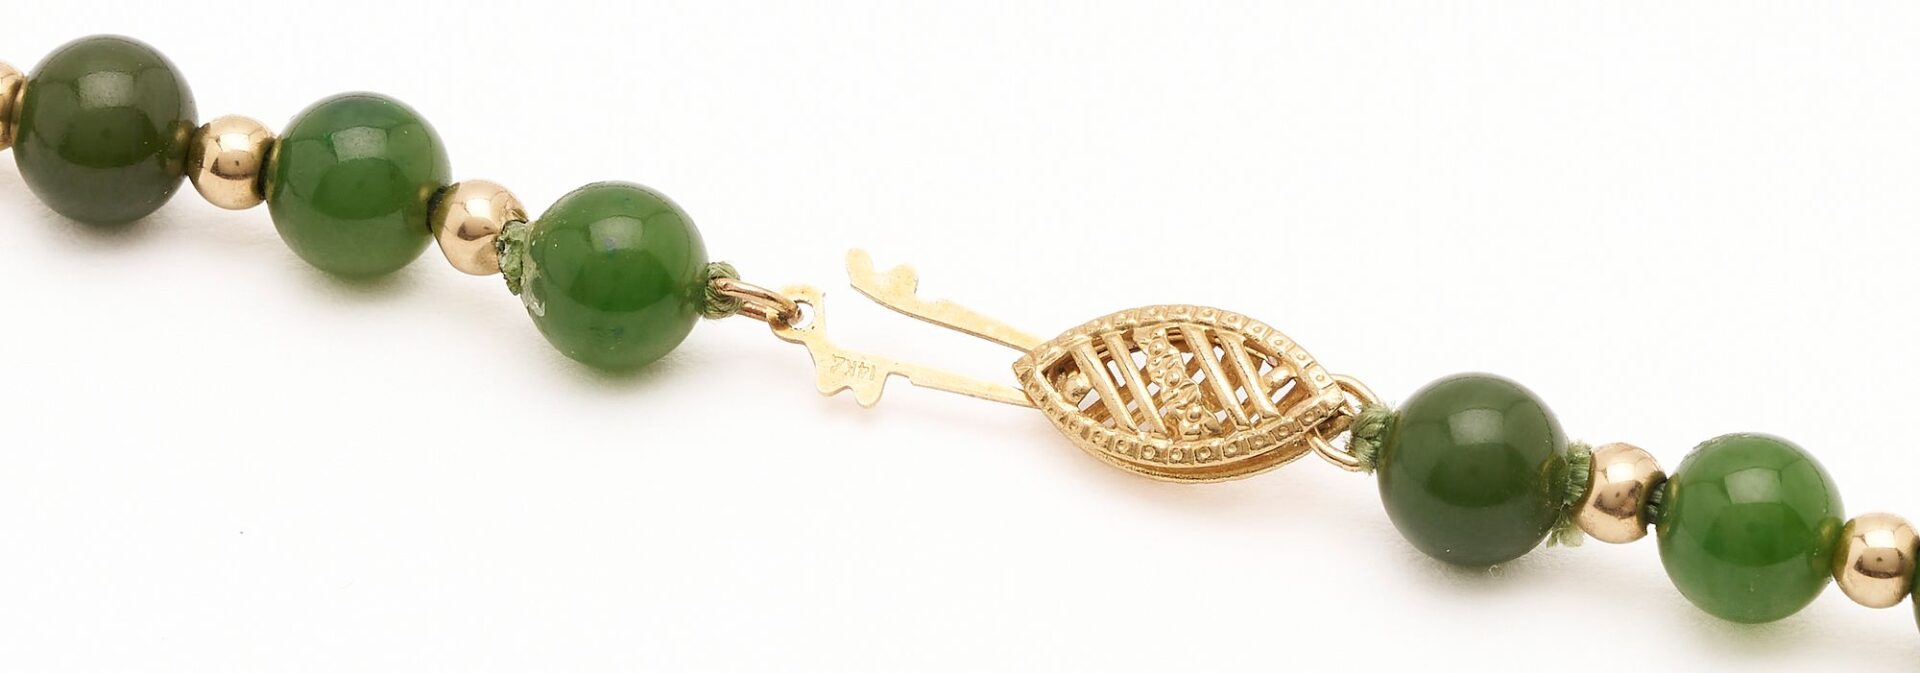 Lot 973: Jade & 14k Necklace, Bracelet & Brooch